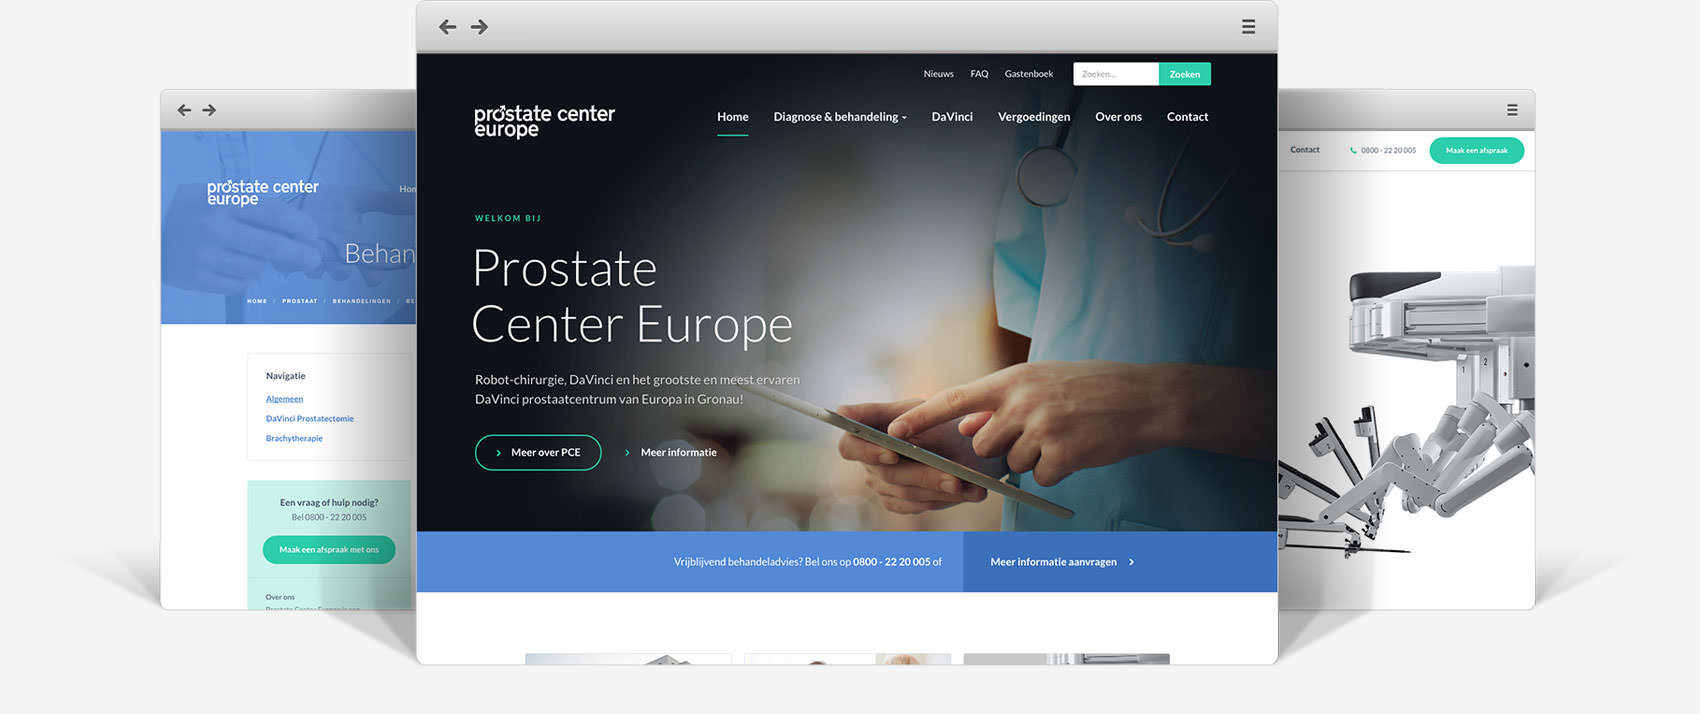 Prostate Center Europe